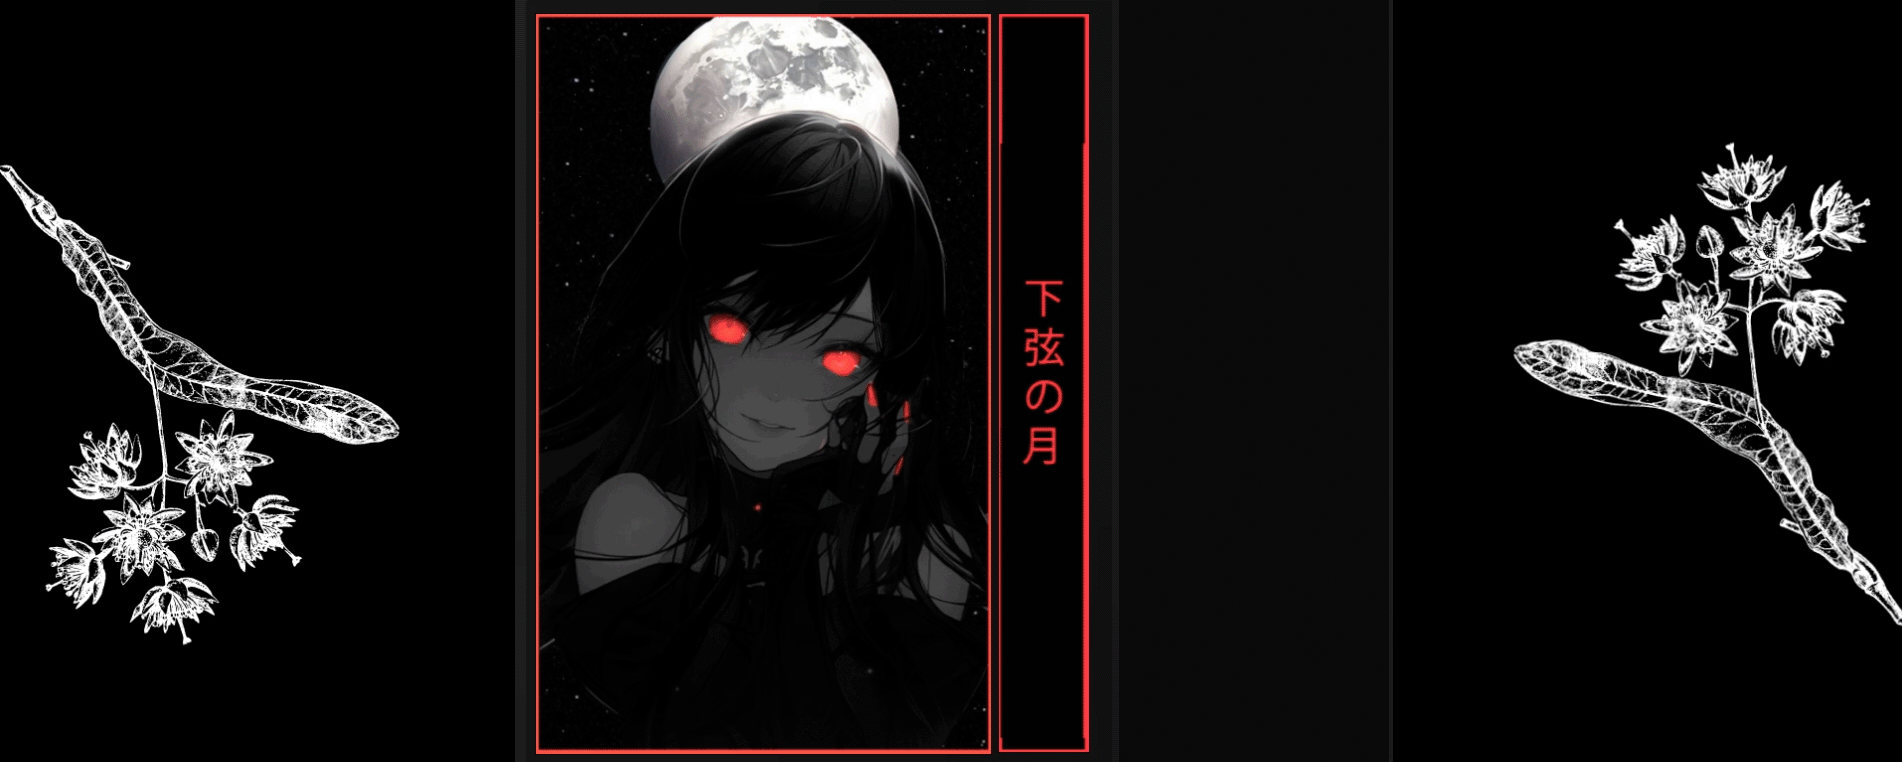 Dark Anime Girl Black And White GIF